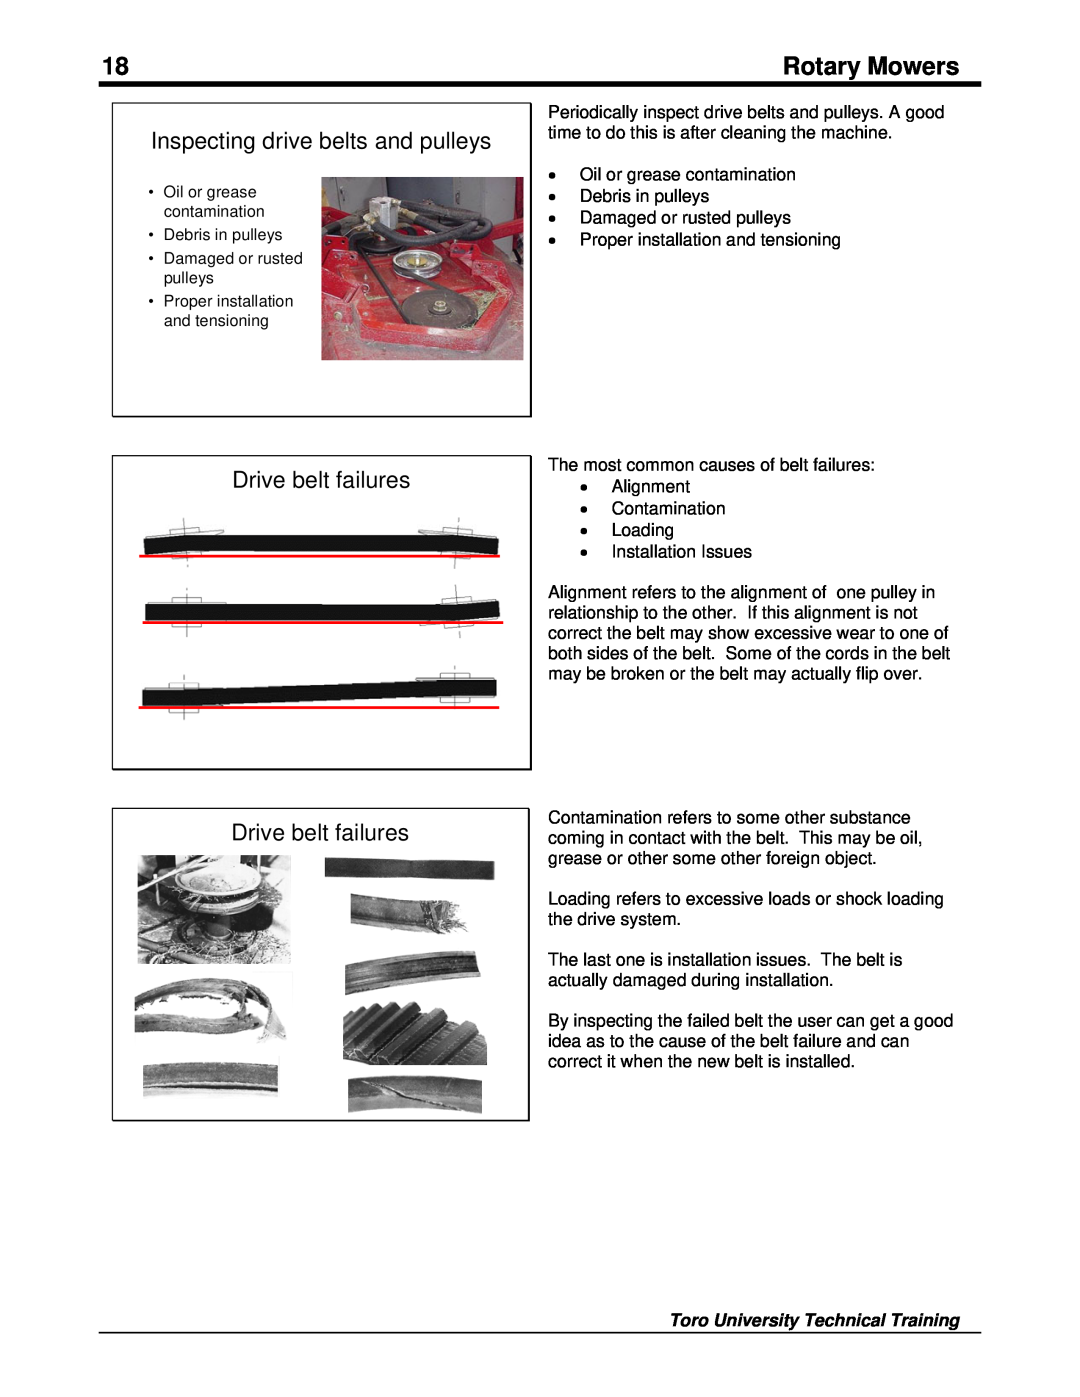 Toro 09167SL Inspecting drive belts and pulleys, Drive belt failures, Rotary Mowers, Toro University Technical Training 